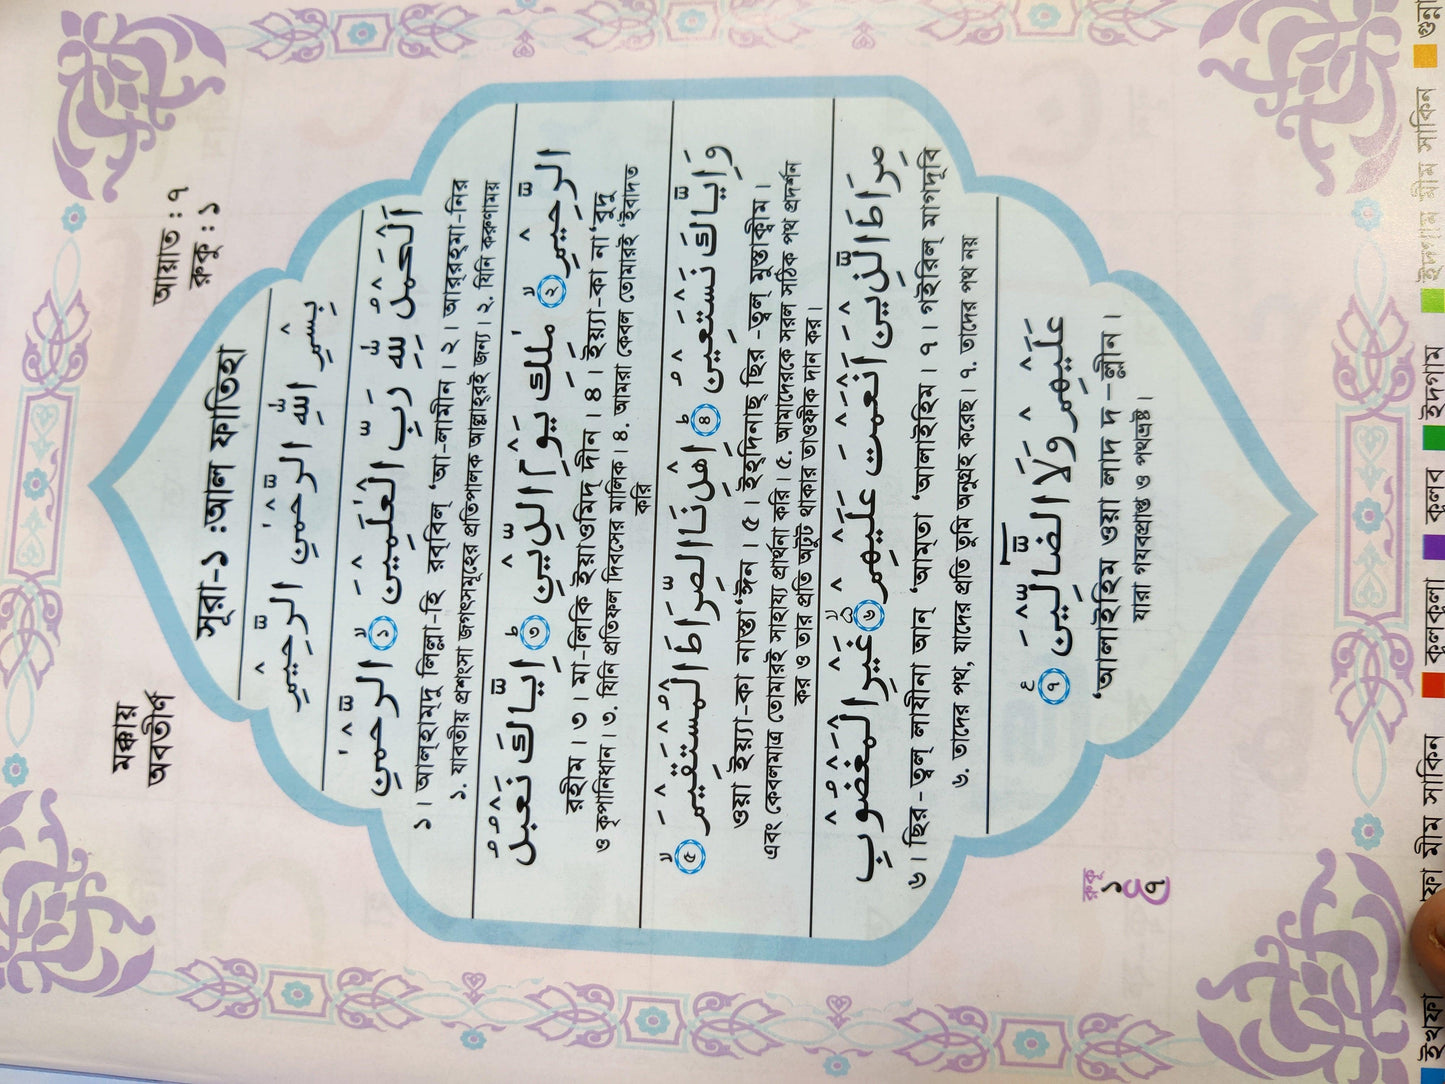 Sohoj Quran - সহজ কুরআন - HT Bazar